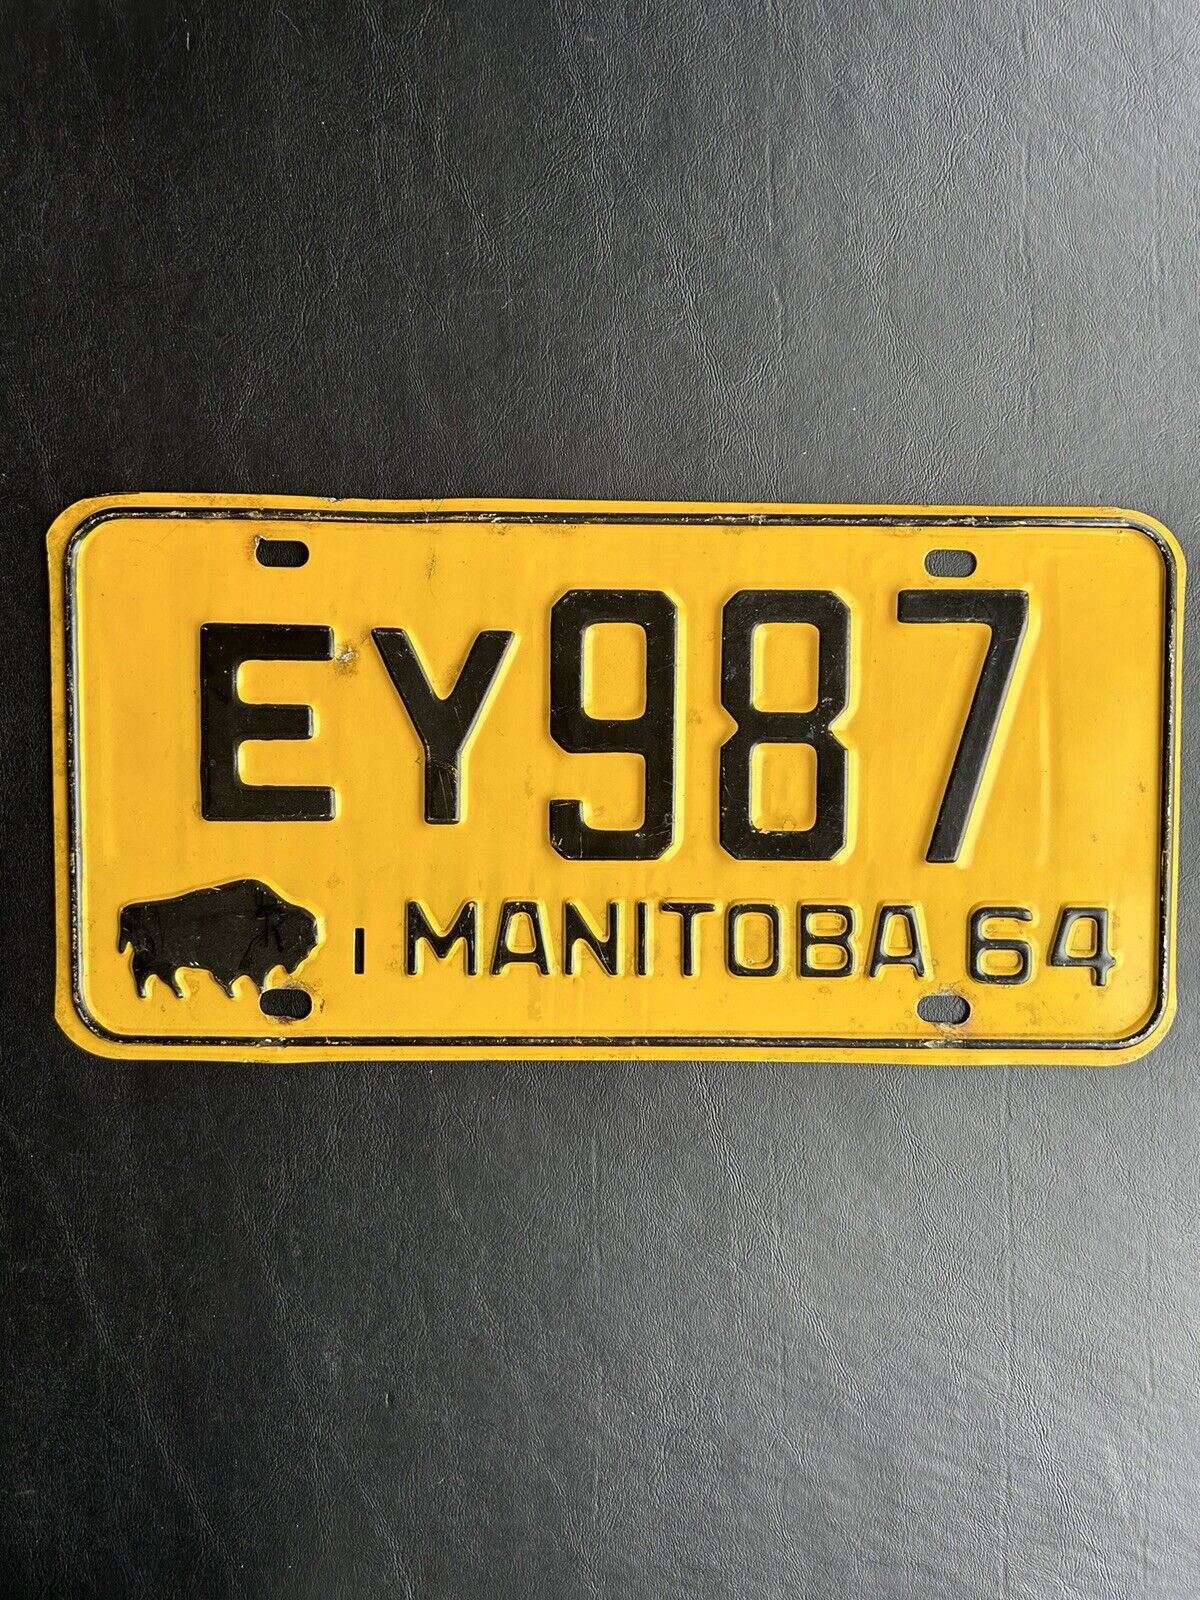 1964 Manitoba License Plate EY 987